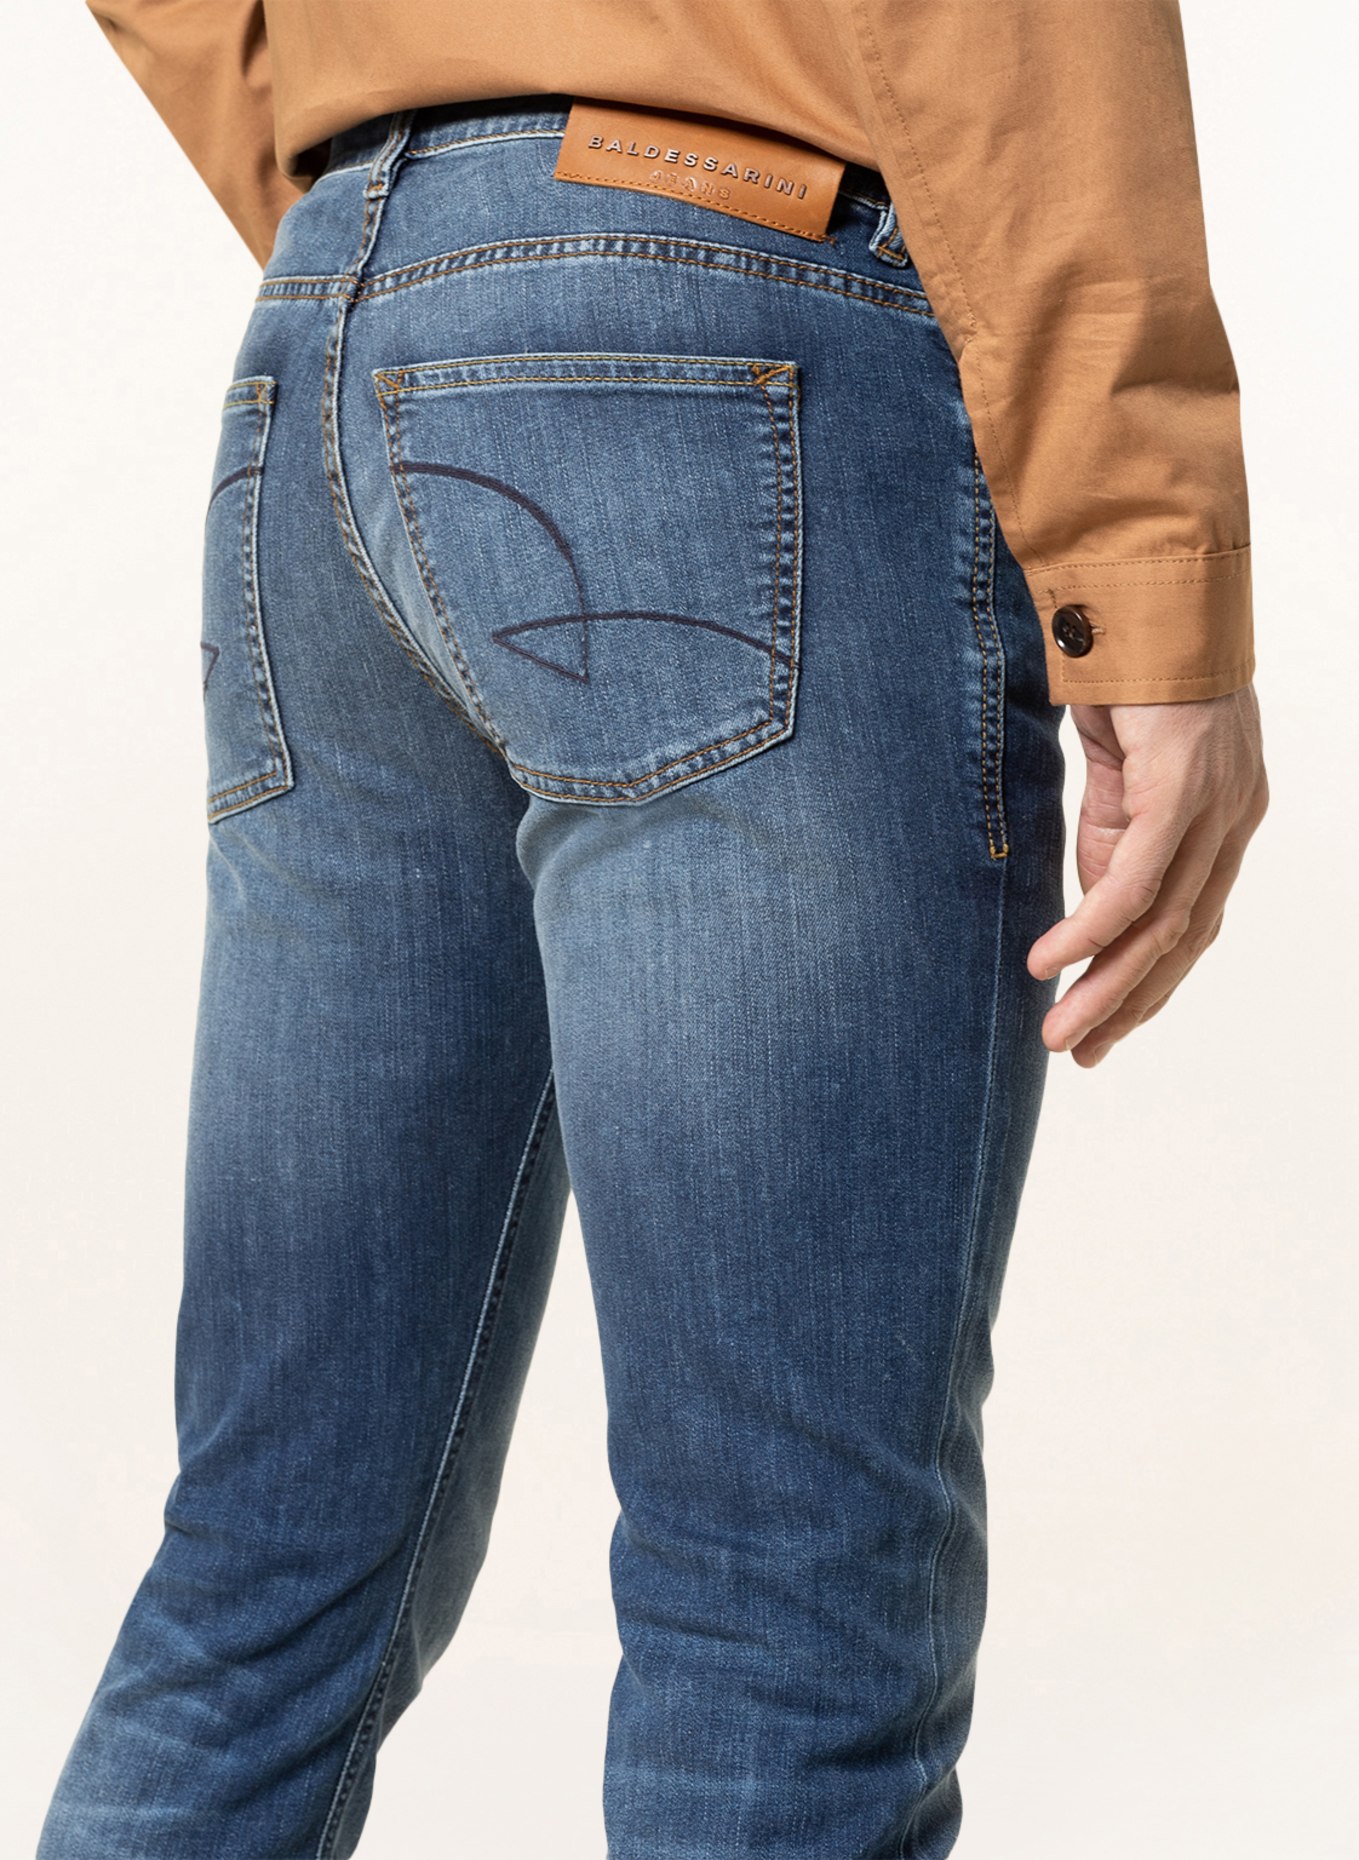 BALDESSARINI Jeans Regular Fit, Farbe: 6855 light blue used buffies (Bild 5)